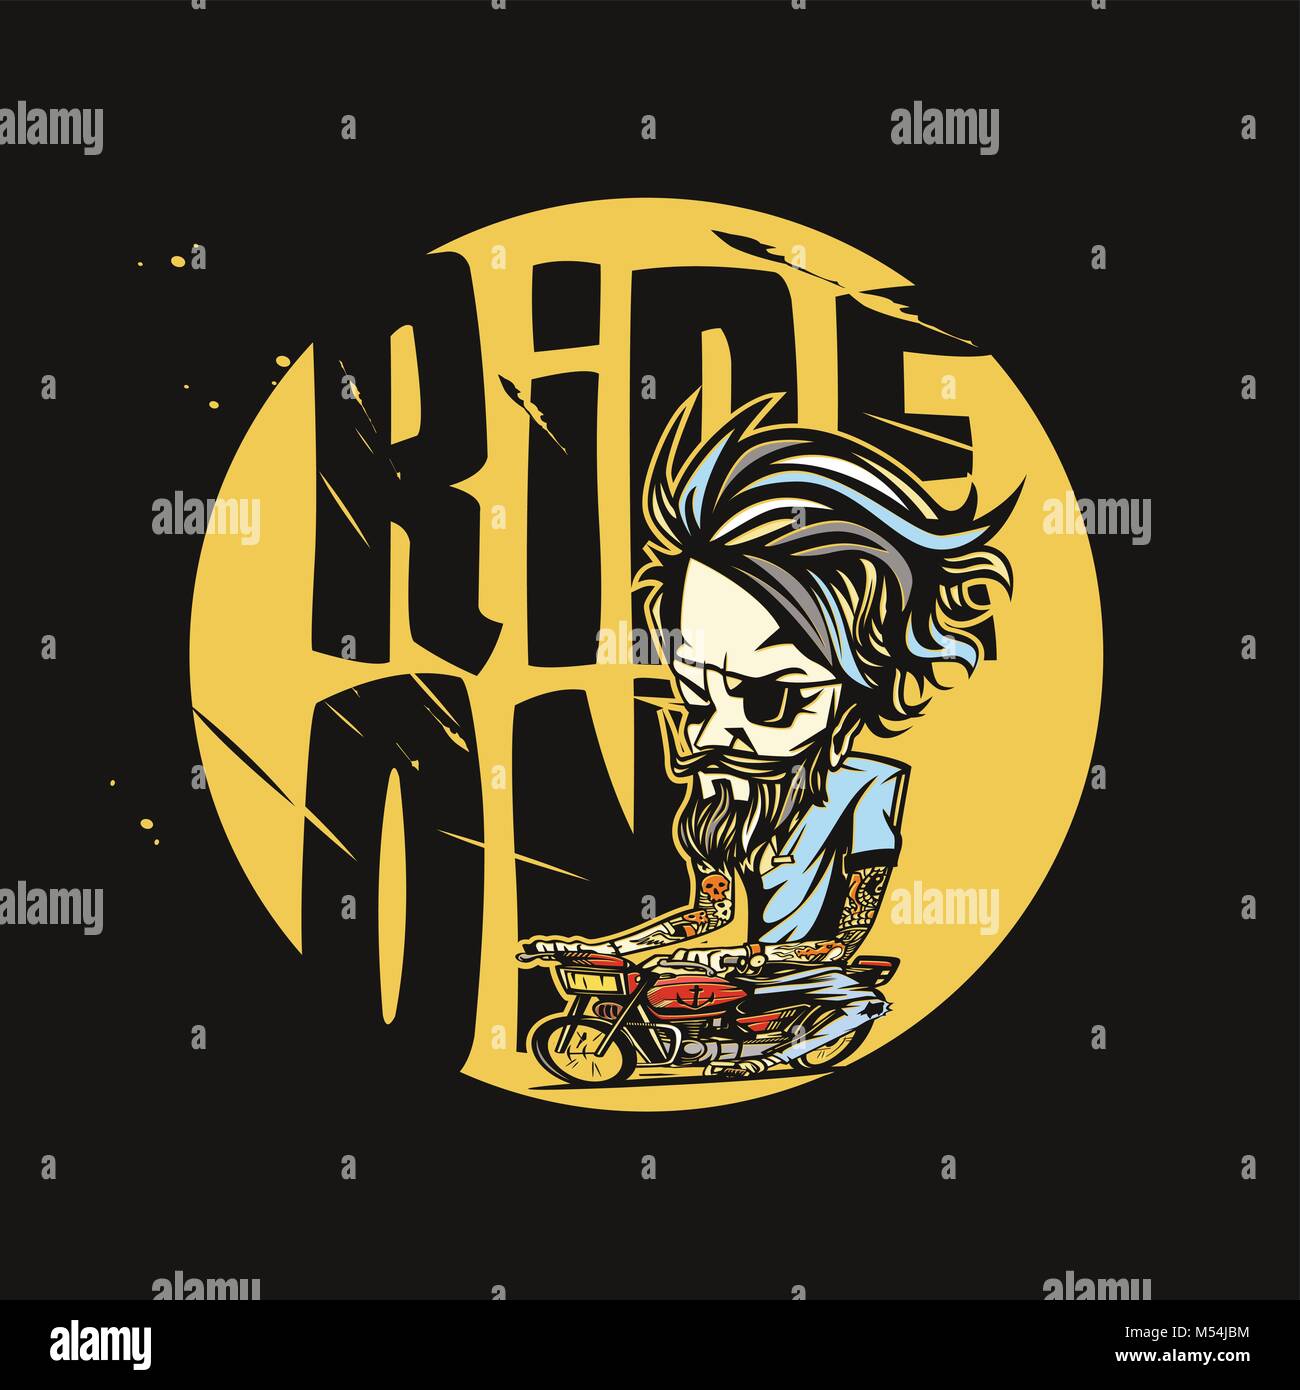 Logo minimale del golden bike rider illustrazione vettoriale Illustrazione Vettoriale